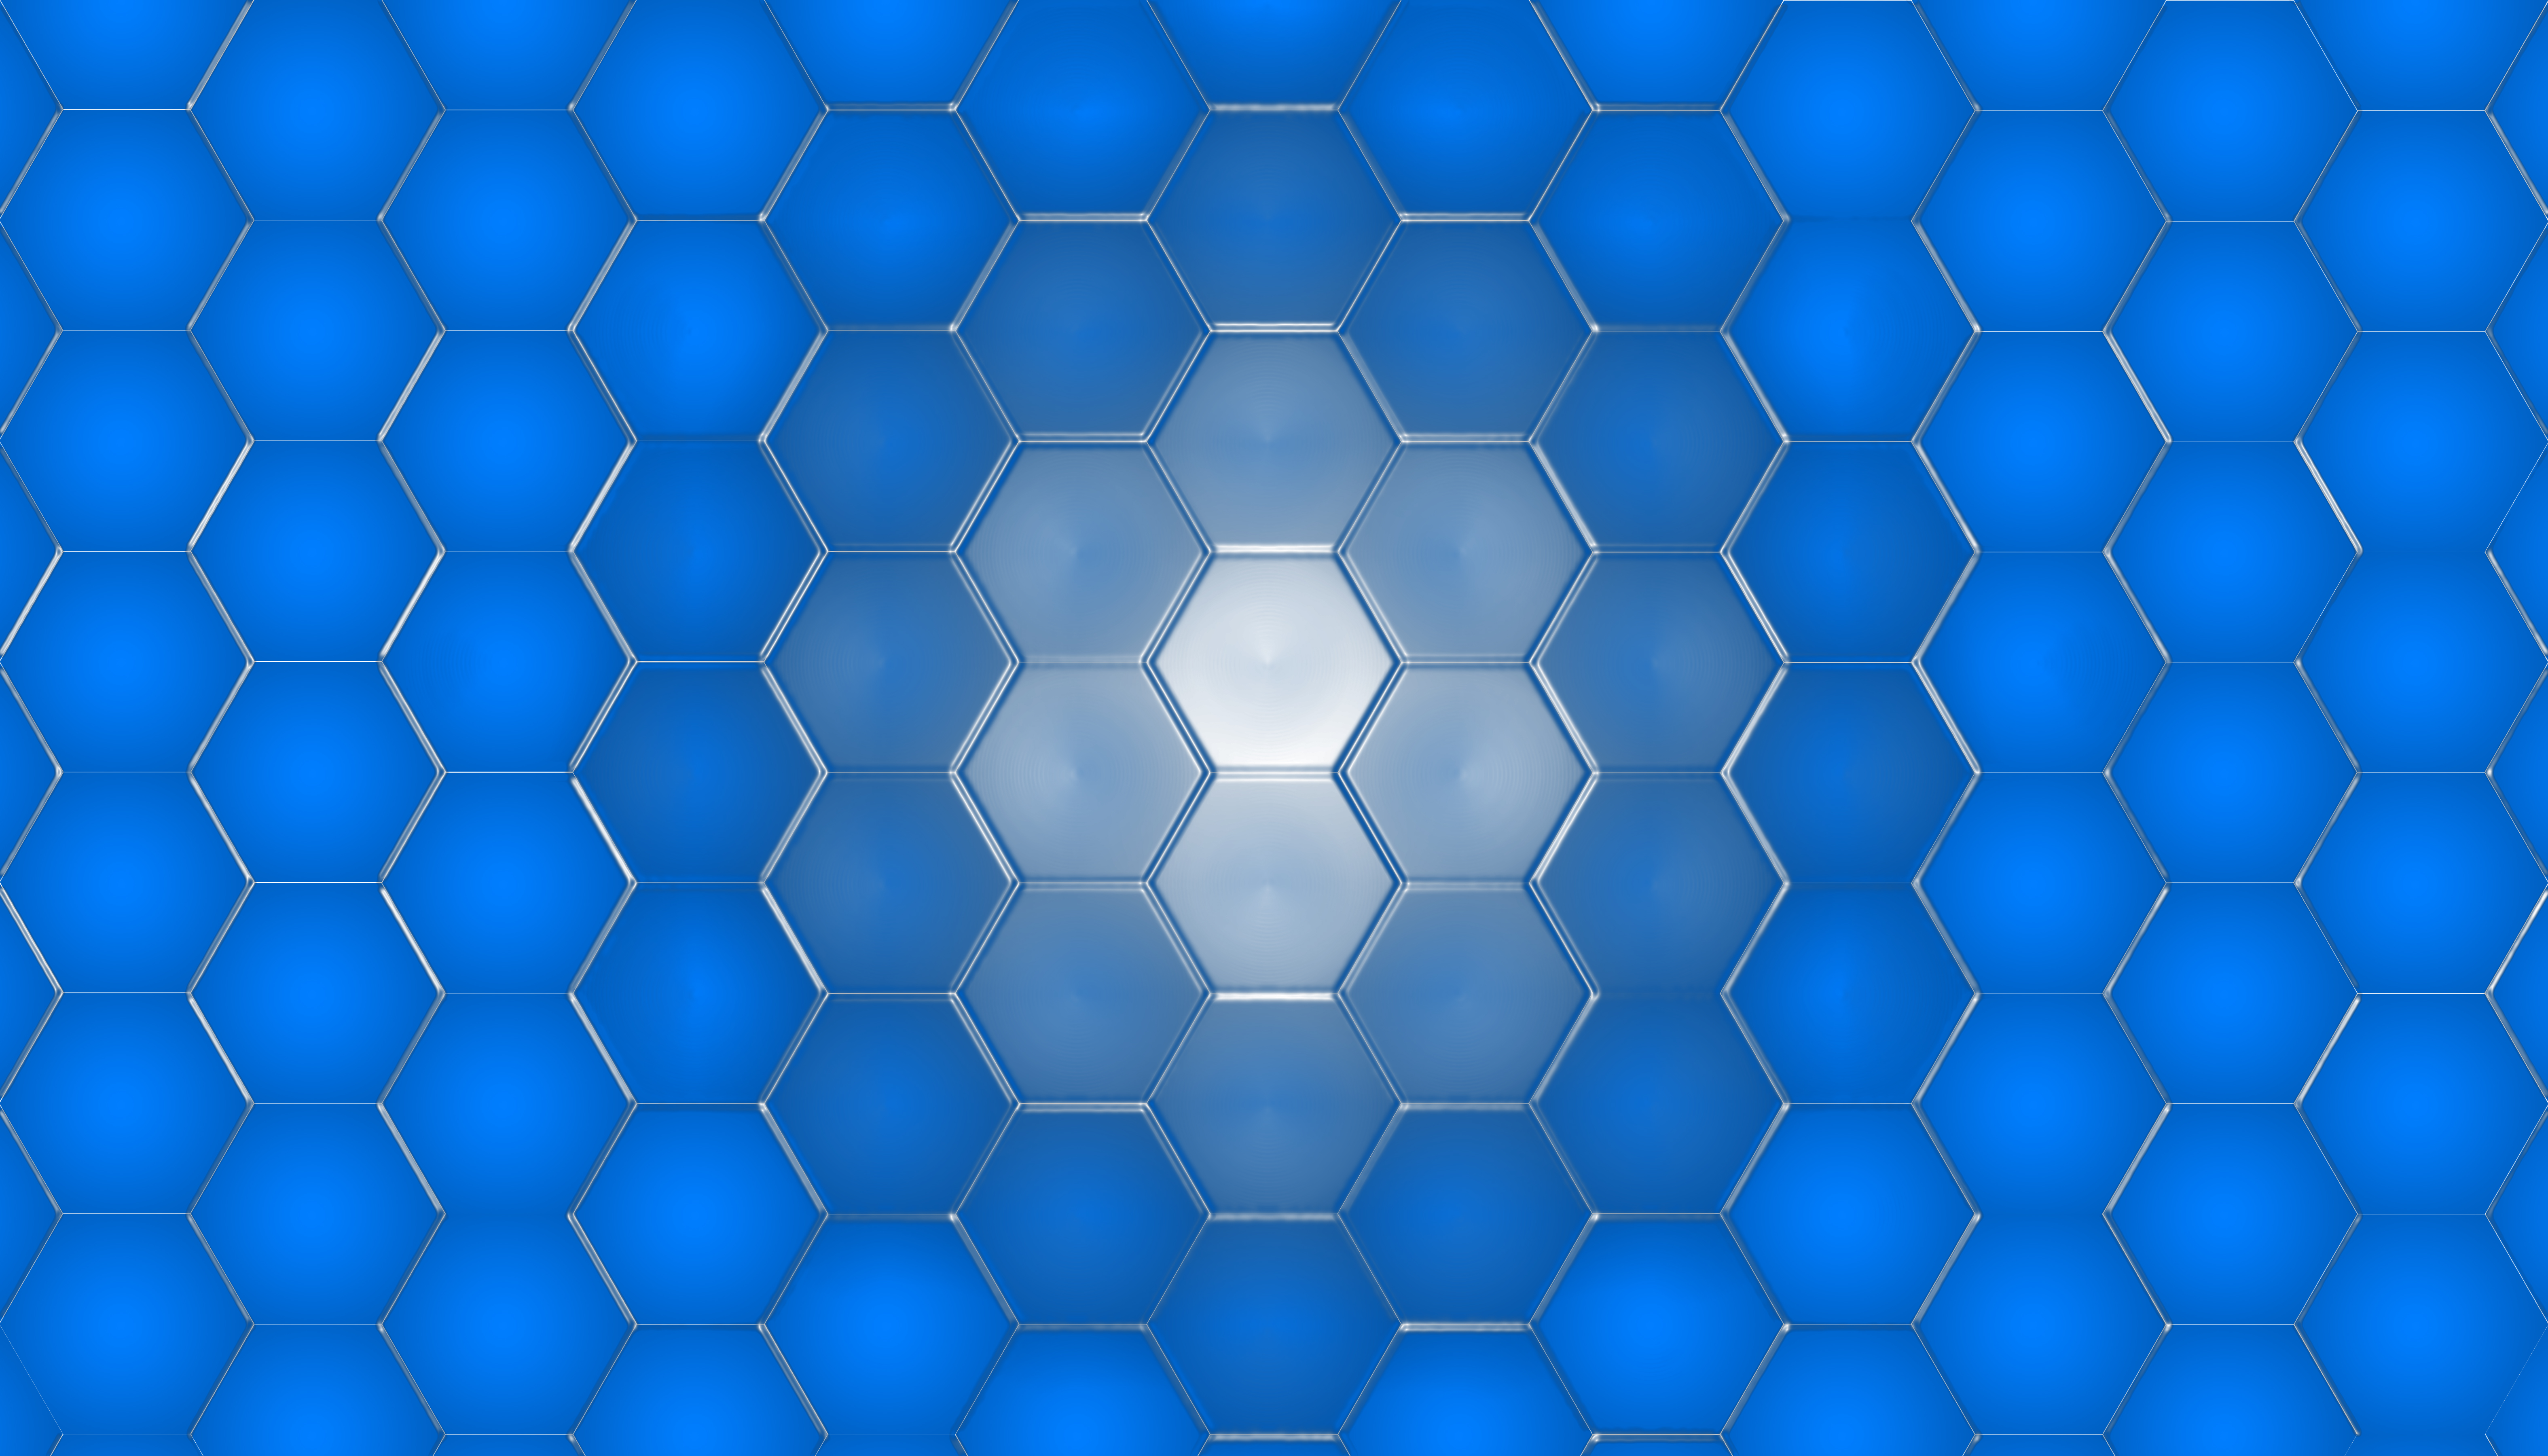 Blue Hexagon Wallpaper Wallpapersafari HD Wallpapers Download Free Map Images Wallpaper [wallpaper684.blogspot.com]